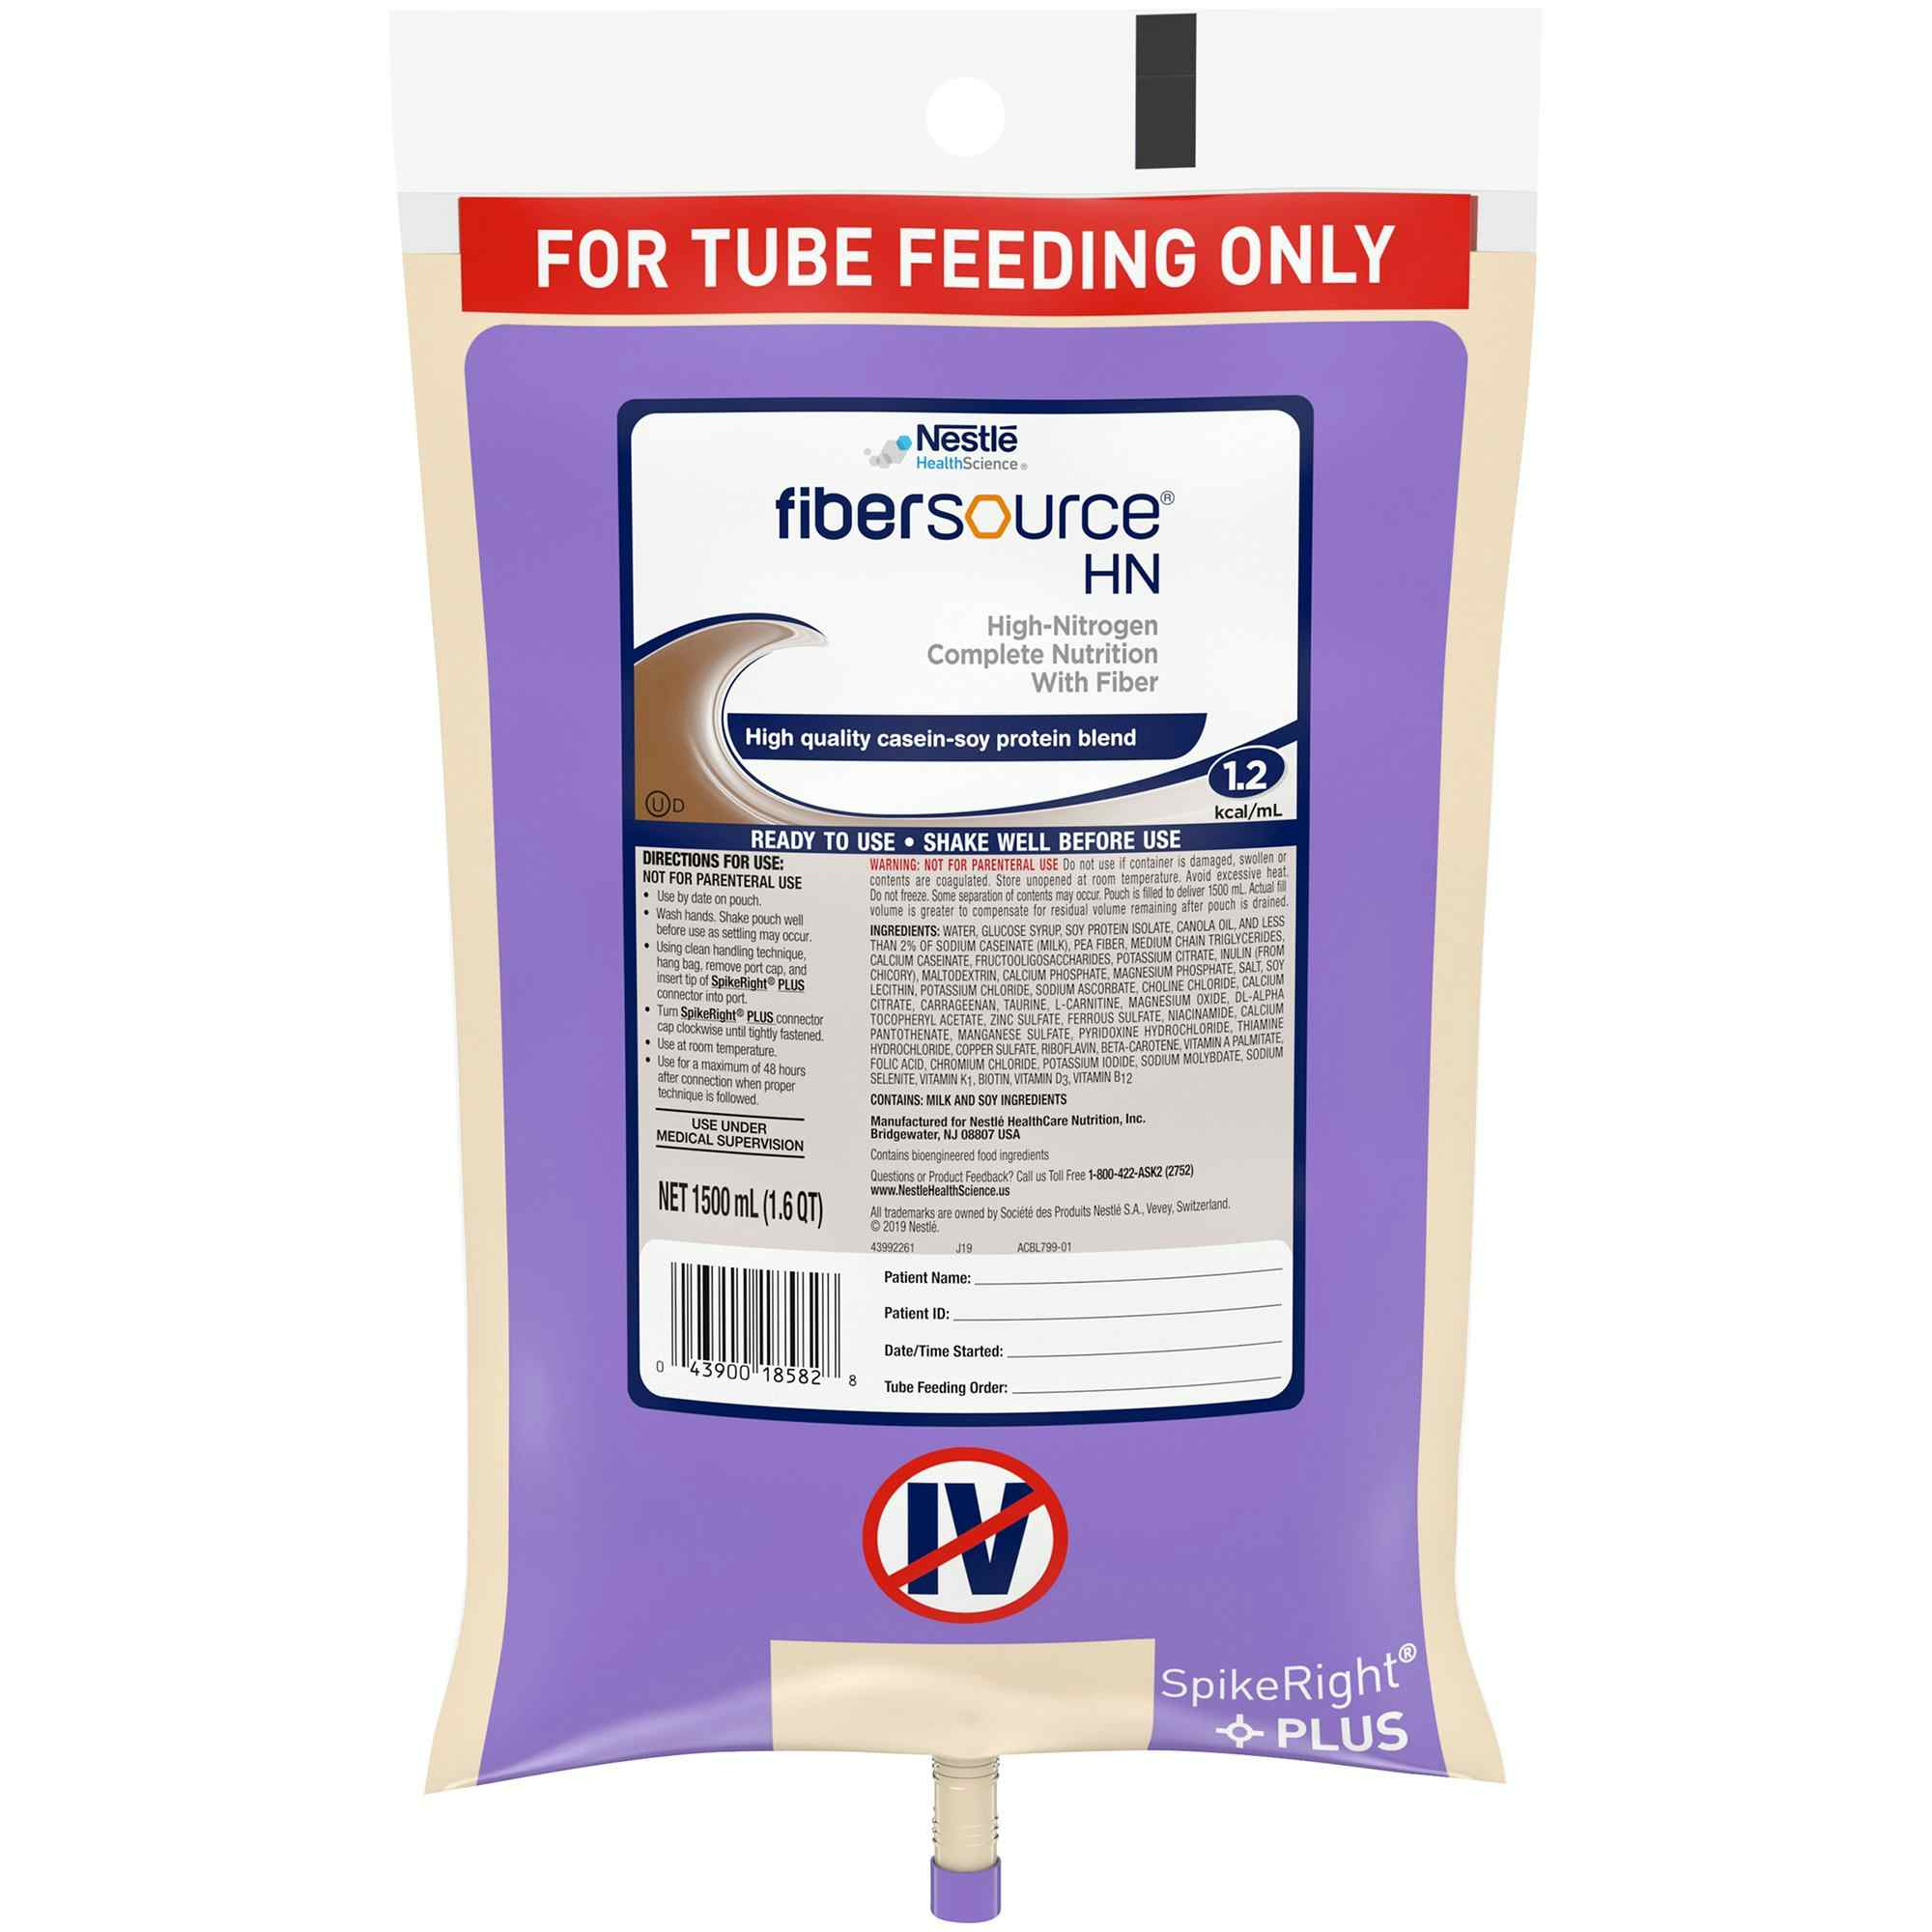 Fibersource HN High-Nitrogen Complete Nutrition with Fiber Tube Feeding Formula, 10043900185832, 50.7 oz. - Case of 4